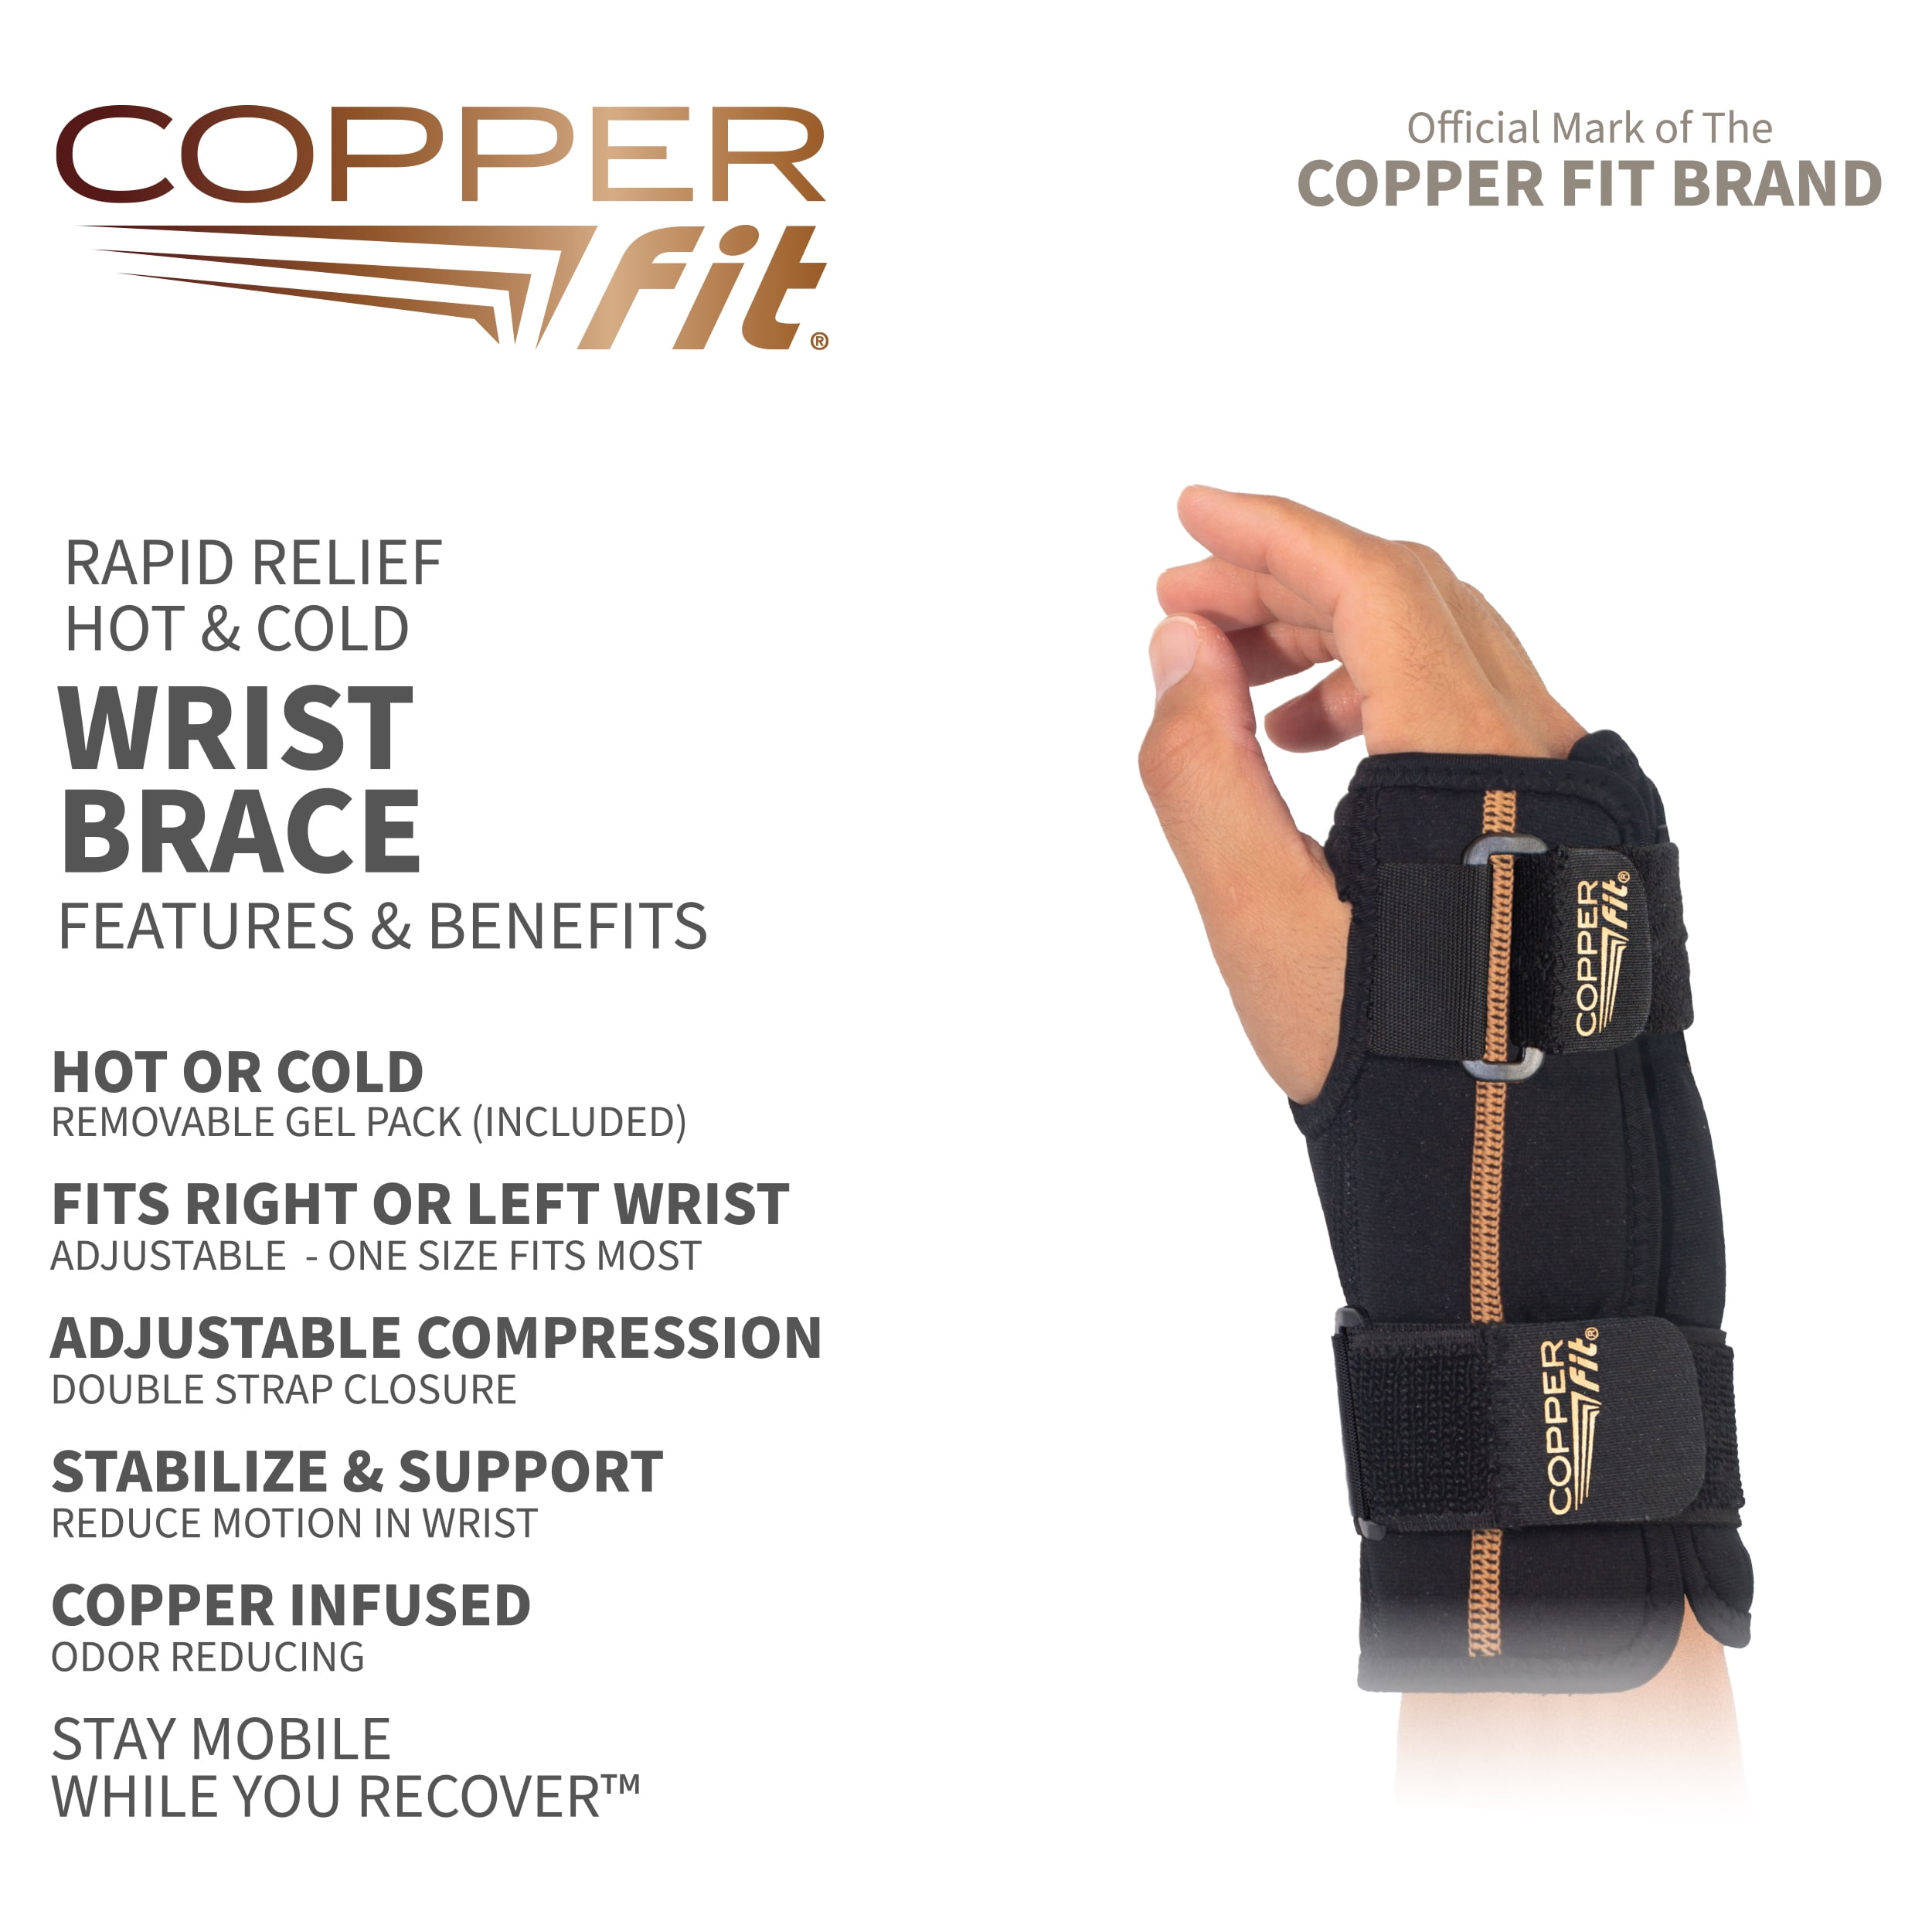 Copper Fit Raipid Relief Wrist Brace for Sale in Las Vegas, NV